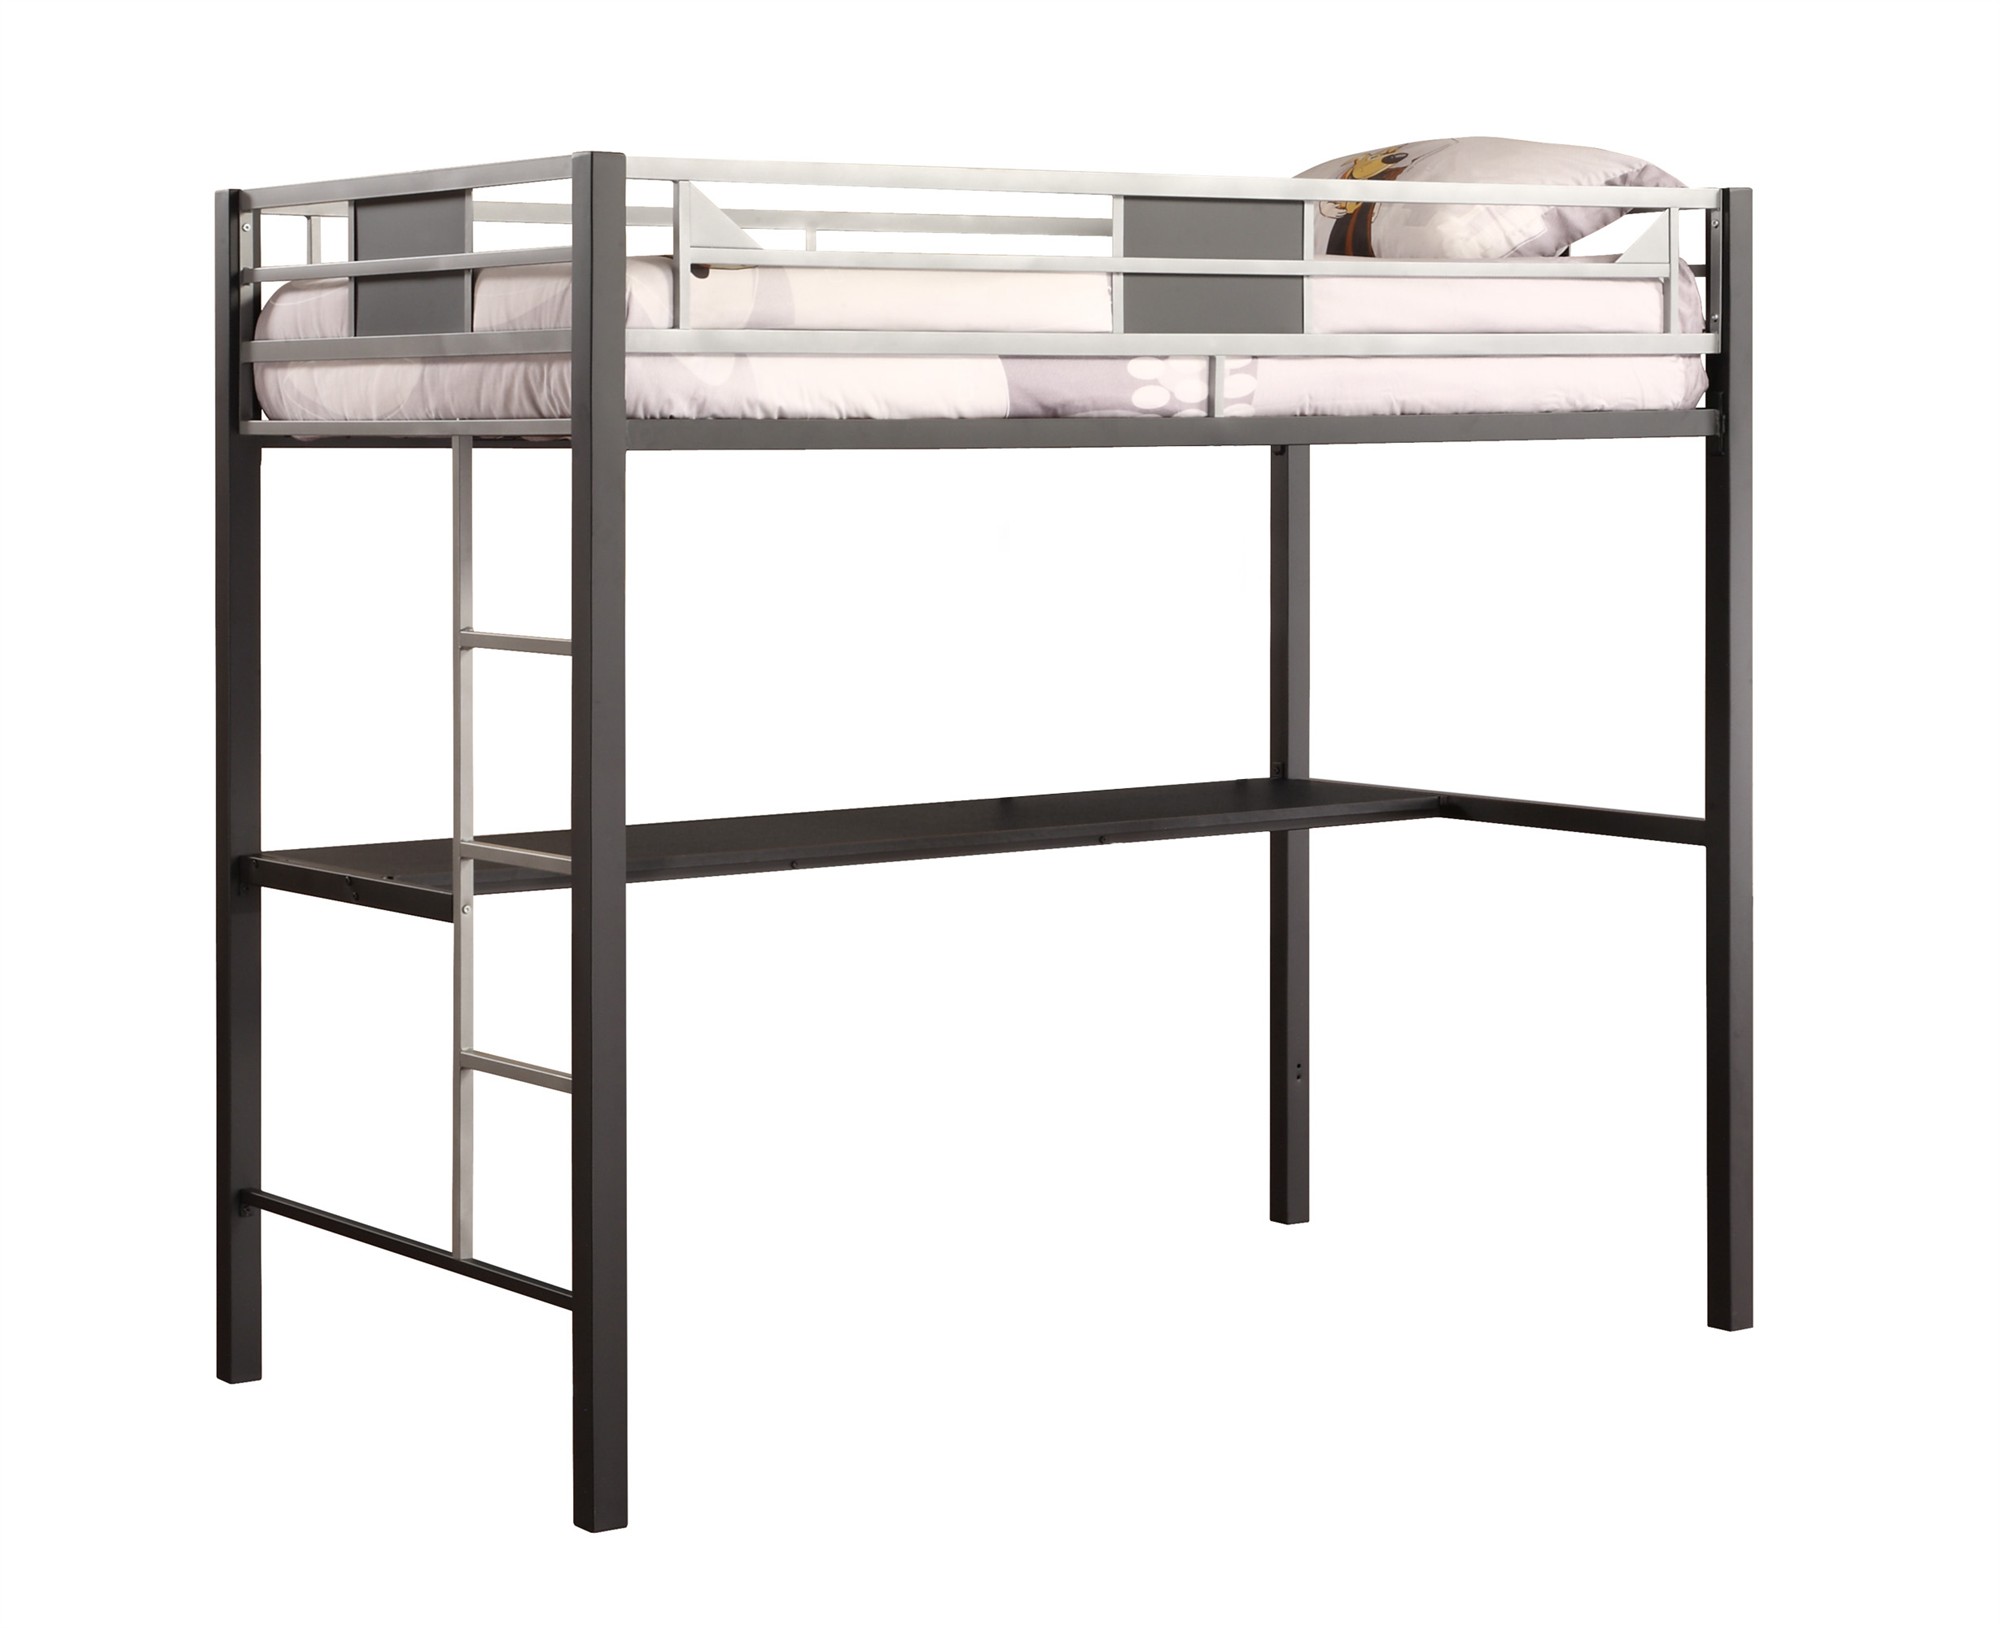 DHP Silver Screen Metal Loft Bunk Bed, Black/Silver - image 3 of 10